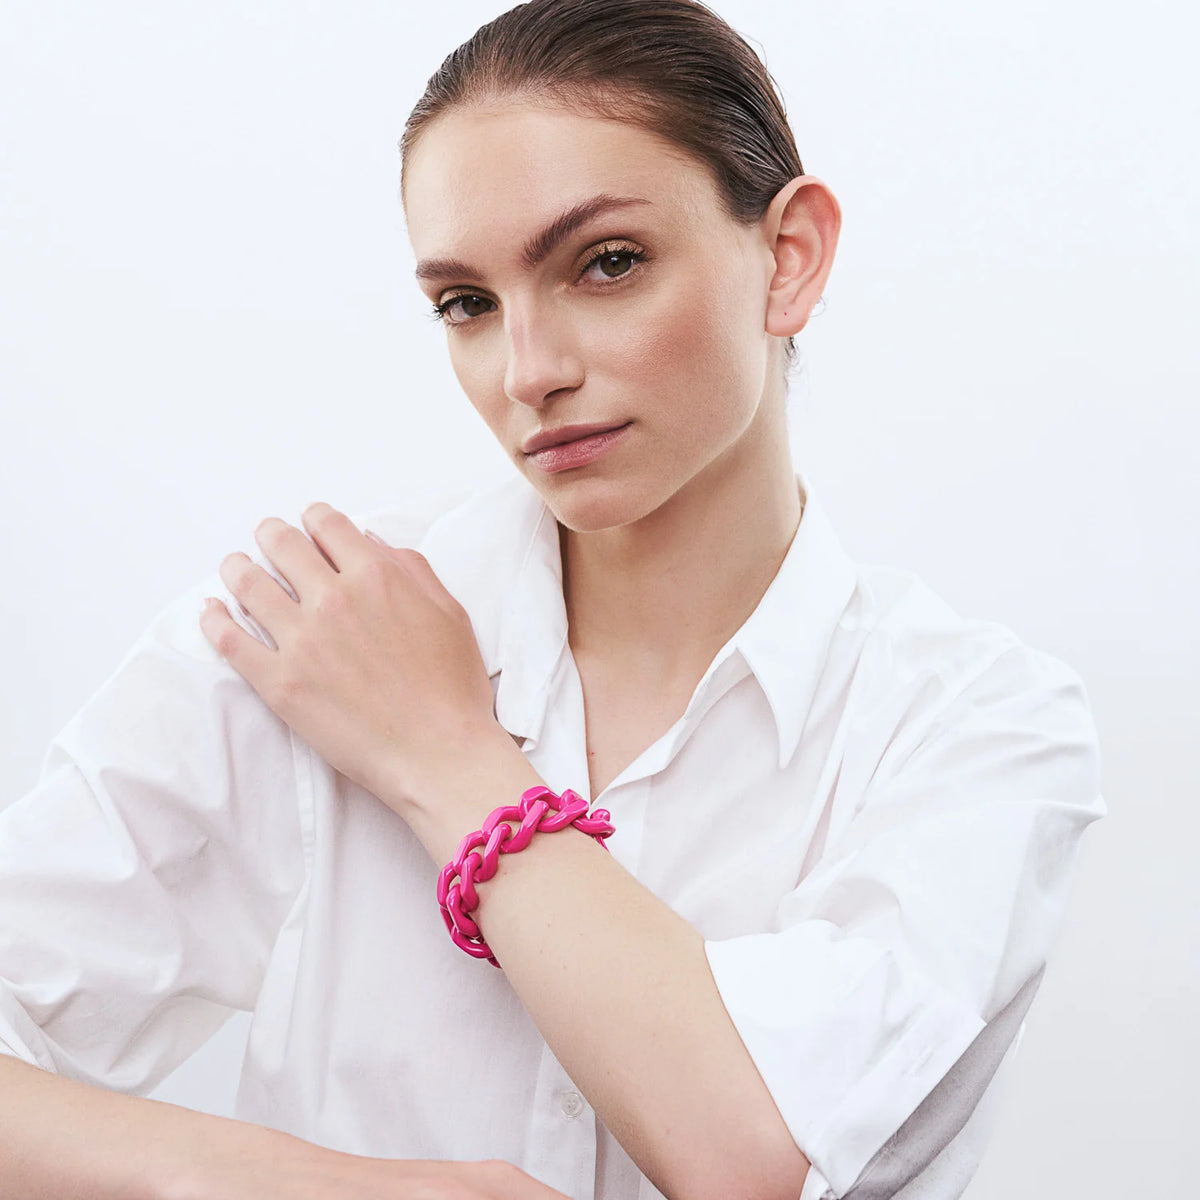 VBARONI Flat Chain Bracelet in Pink